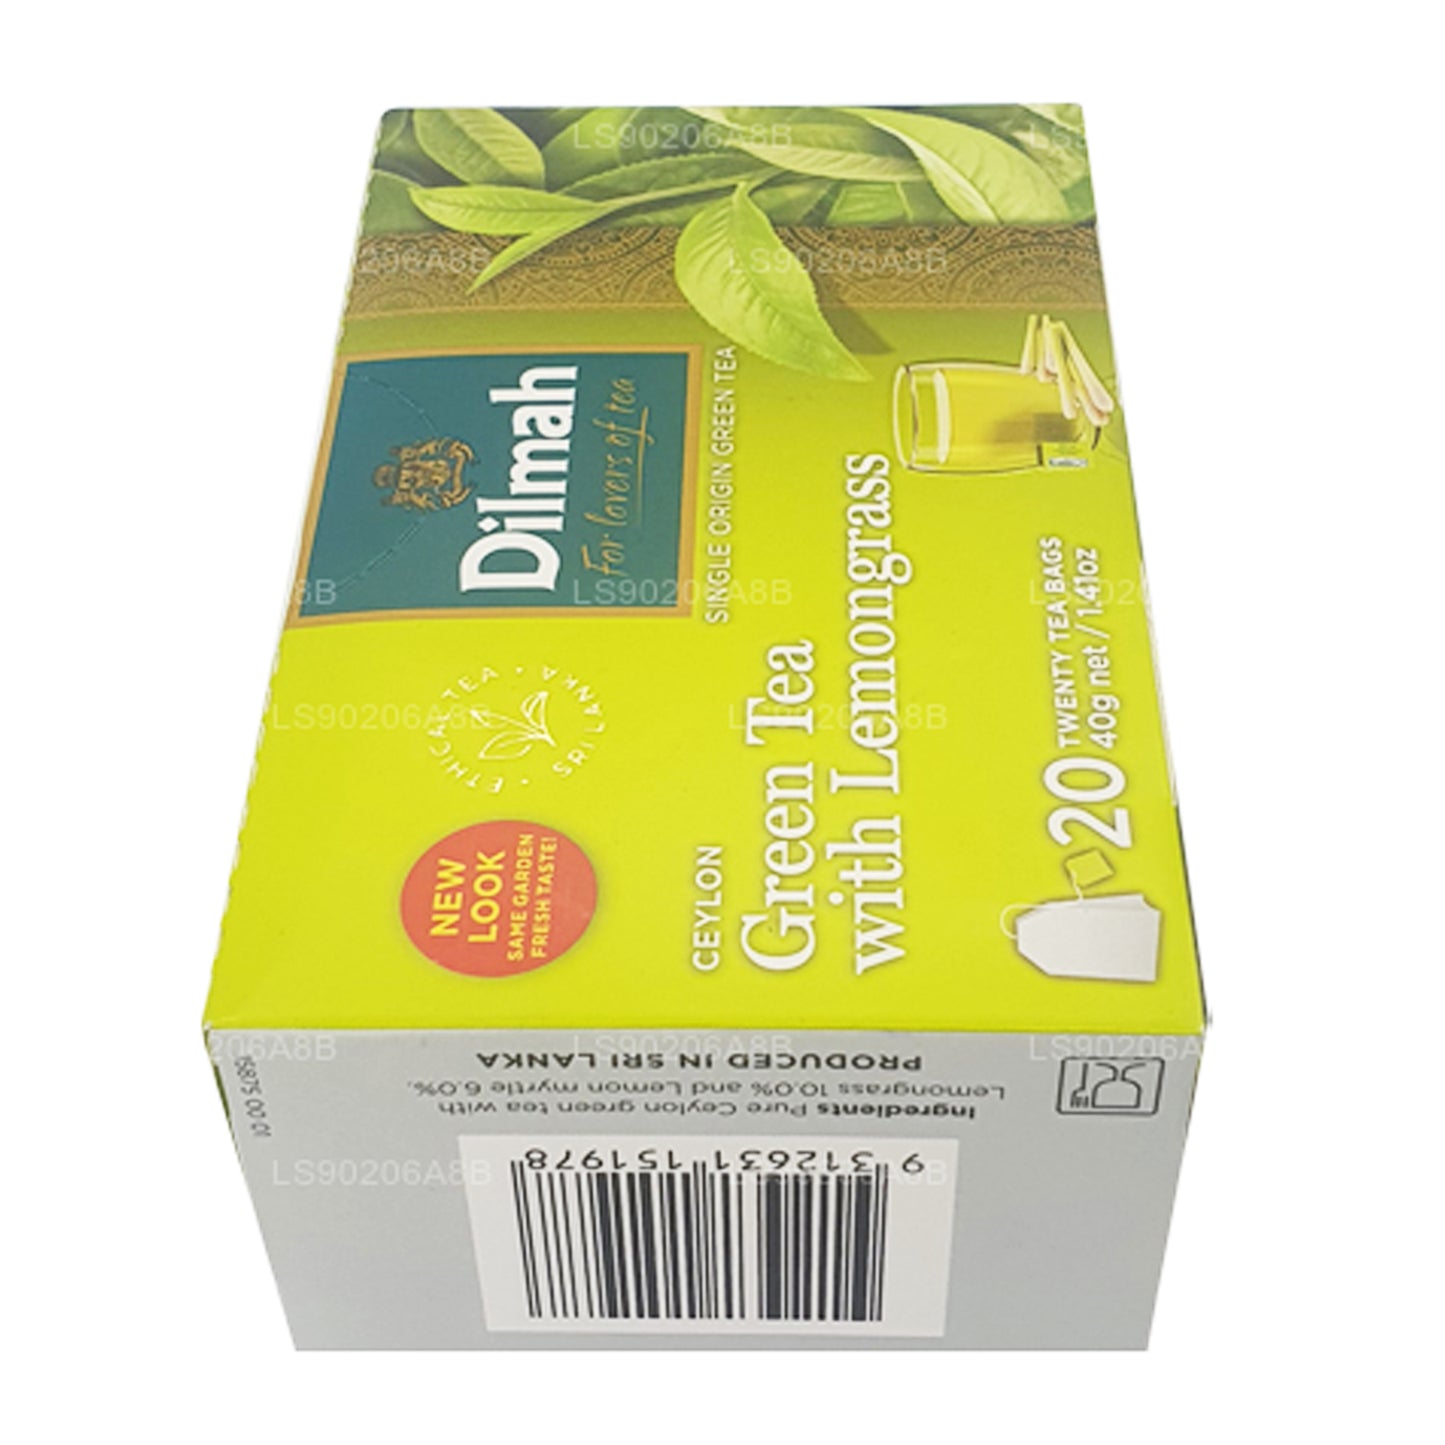 Dilmah Czysta Ceylon Zielona Herbata z Trawą Lemongrass Herbata (40g) 20 torebek